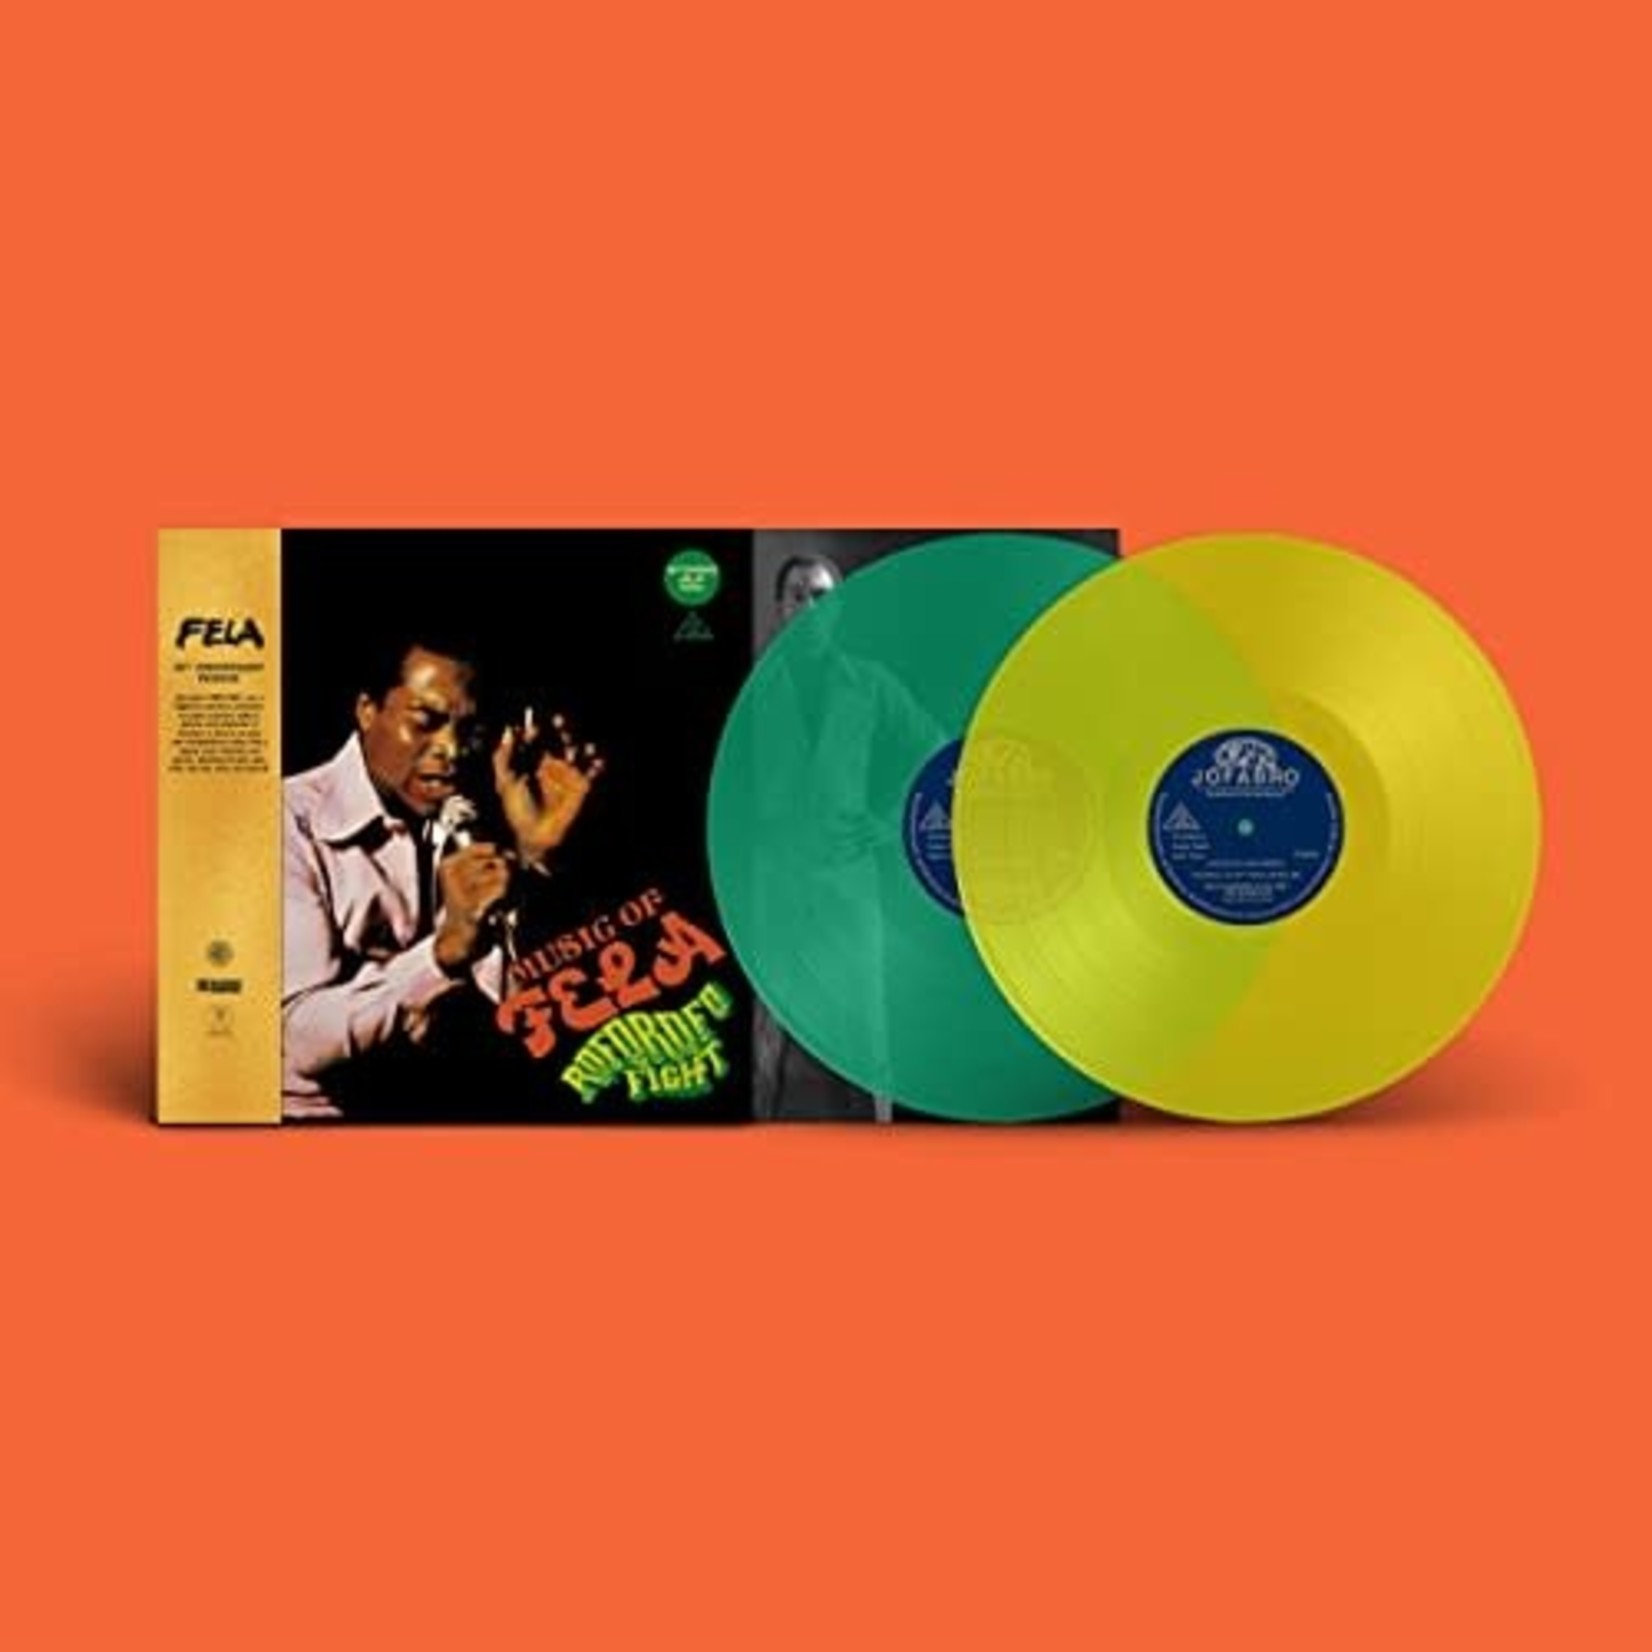 [New] Fela Kuti - Roforofo Fight (2LP, translucent lime & yellow color vinyl)